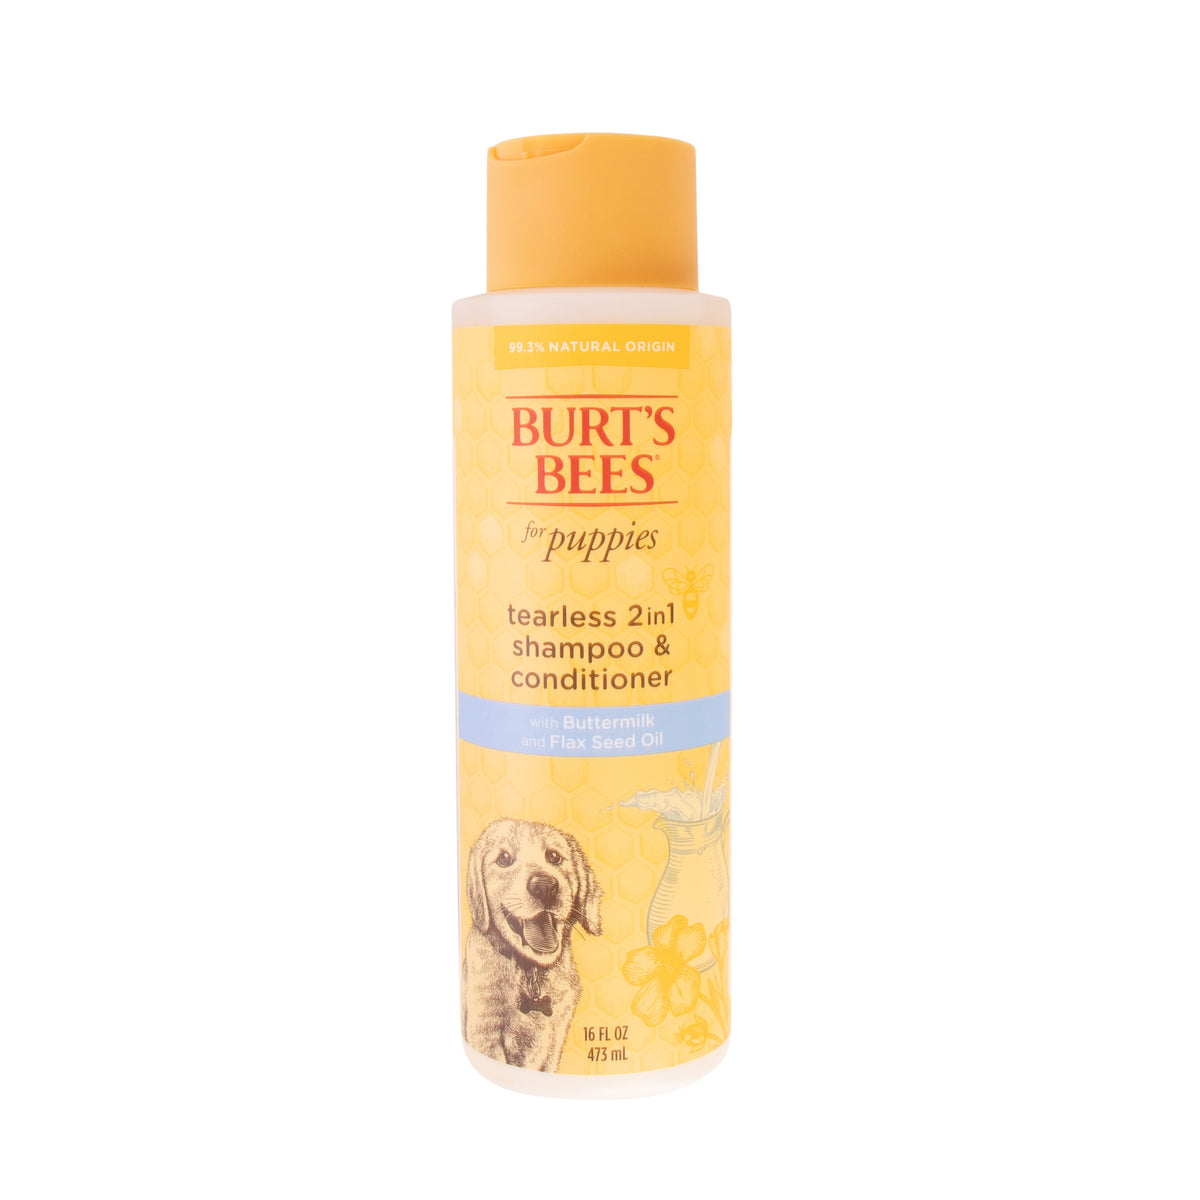 Burt's Bees Tearless 2in1 Puppy Shampoo & Conditioner 473ml